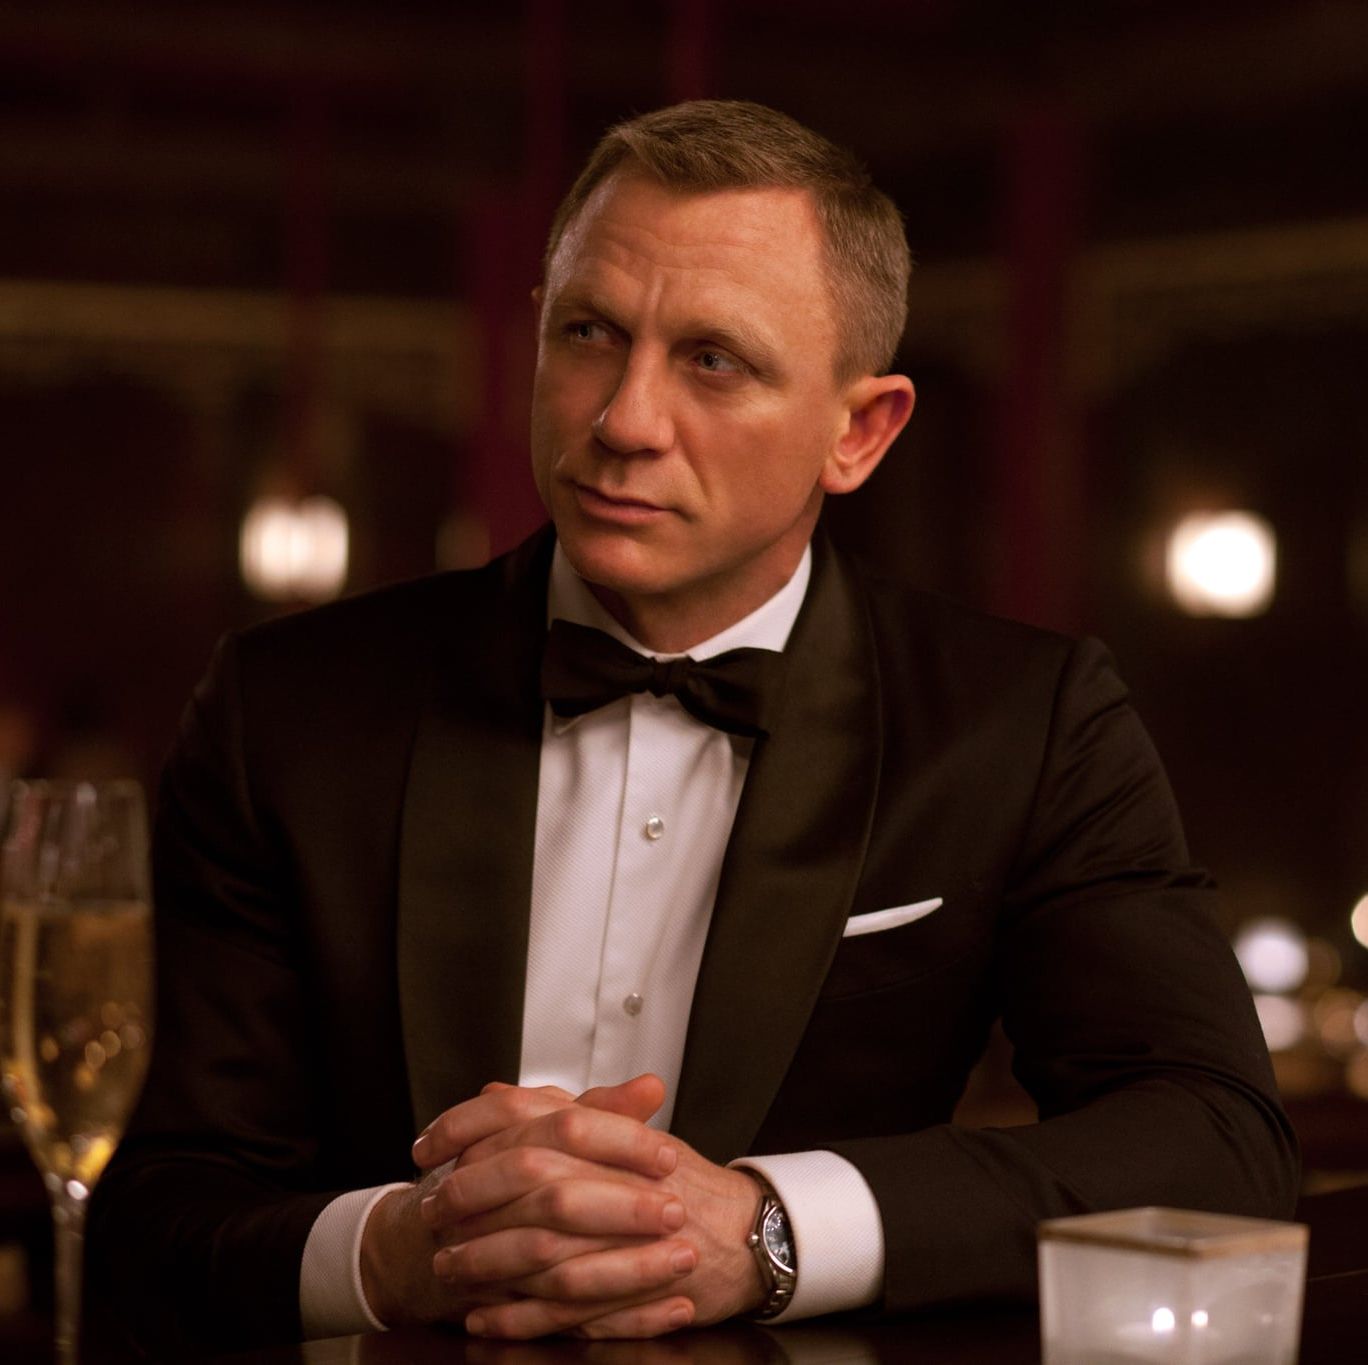 Daniel Craig James Bond 25